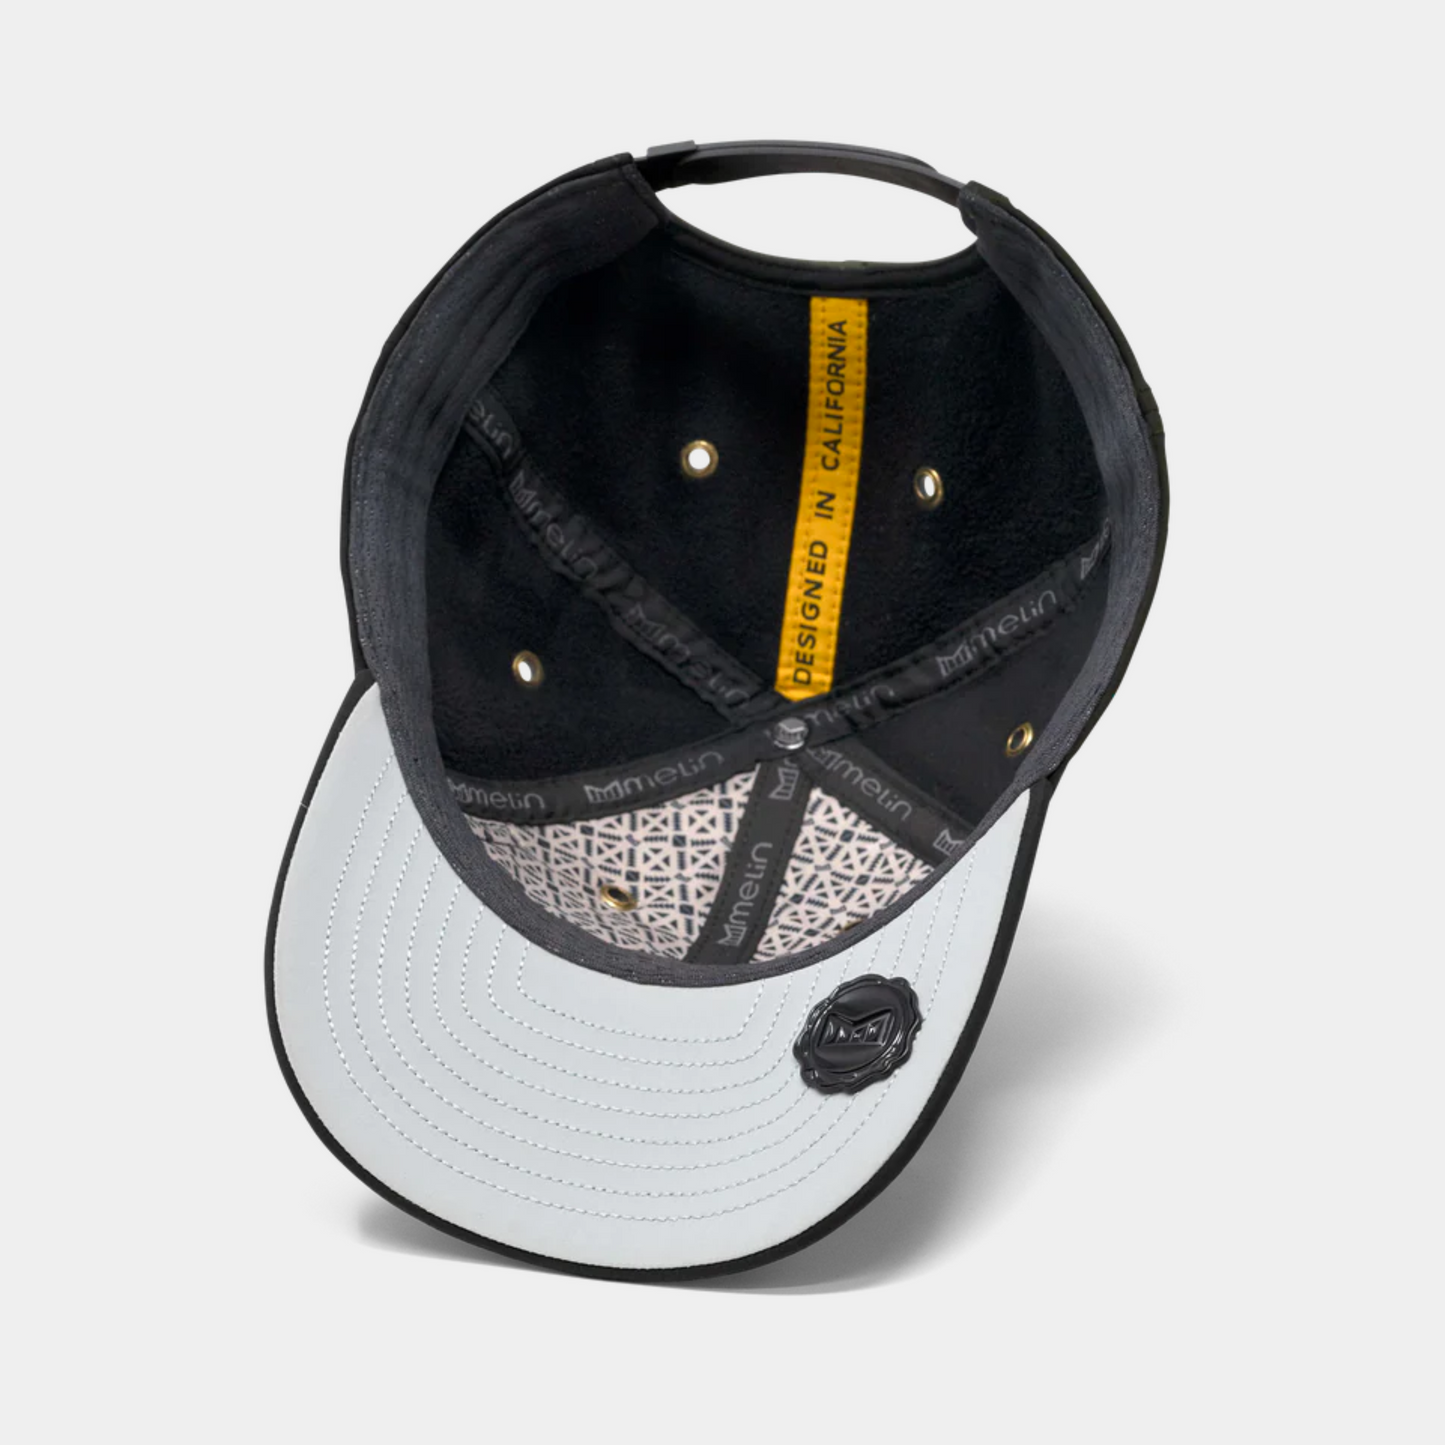 MELIN x UGP A-Game Thermal Hat